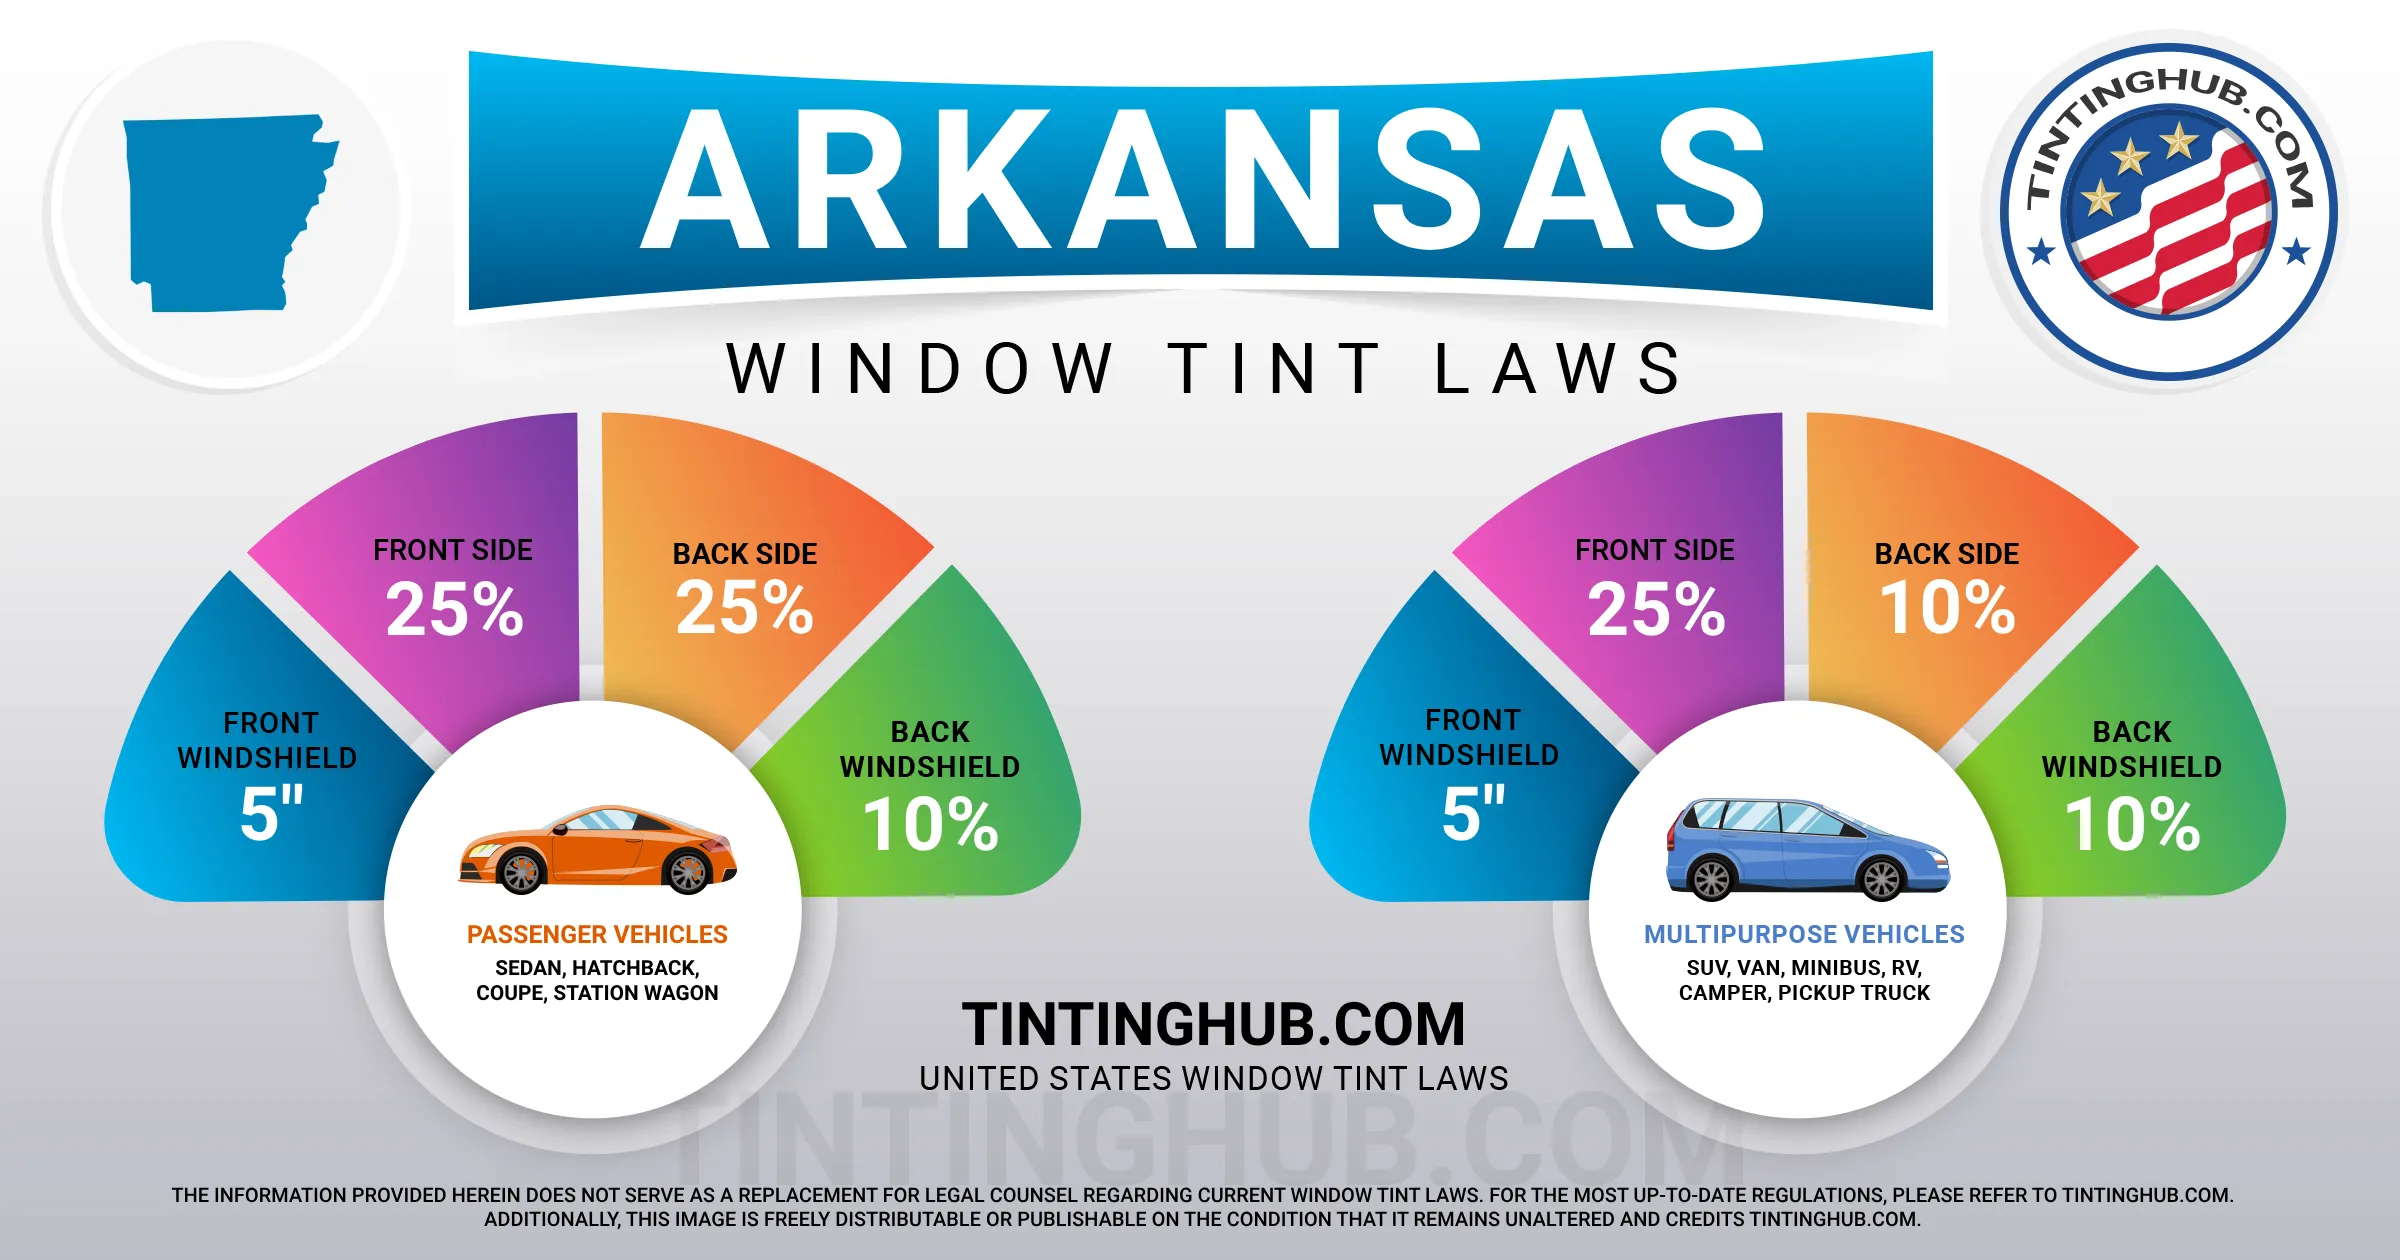 Arkansas Automobile Window Tint Laws